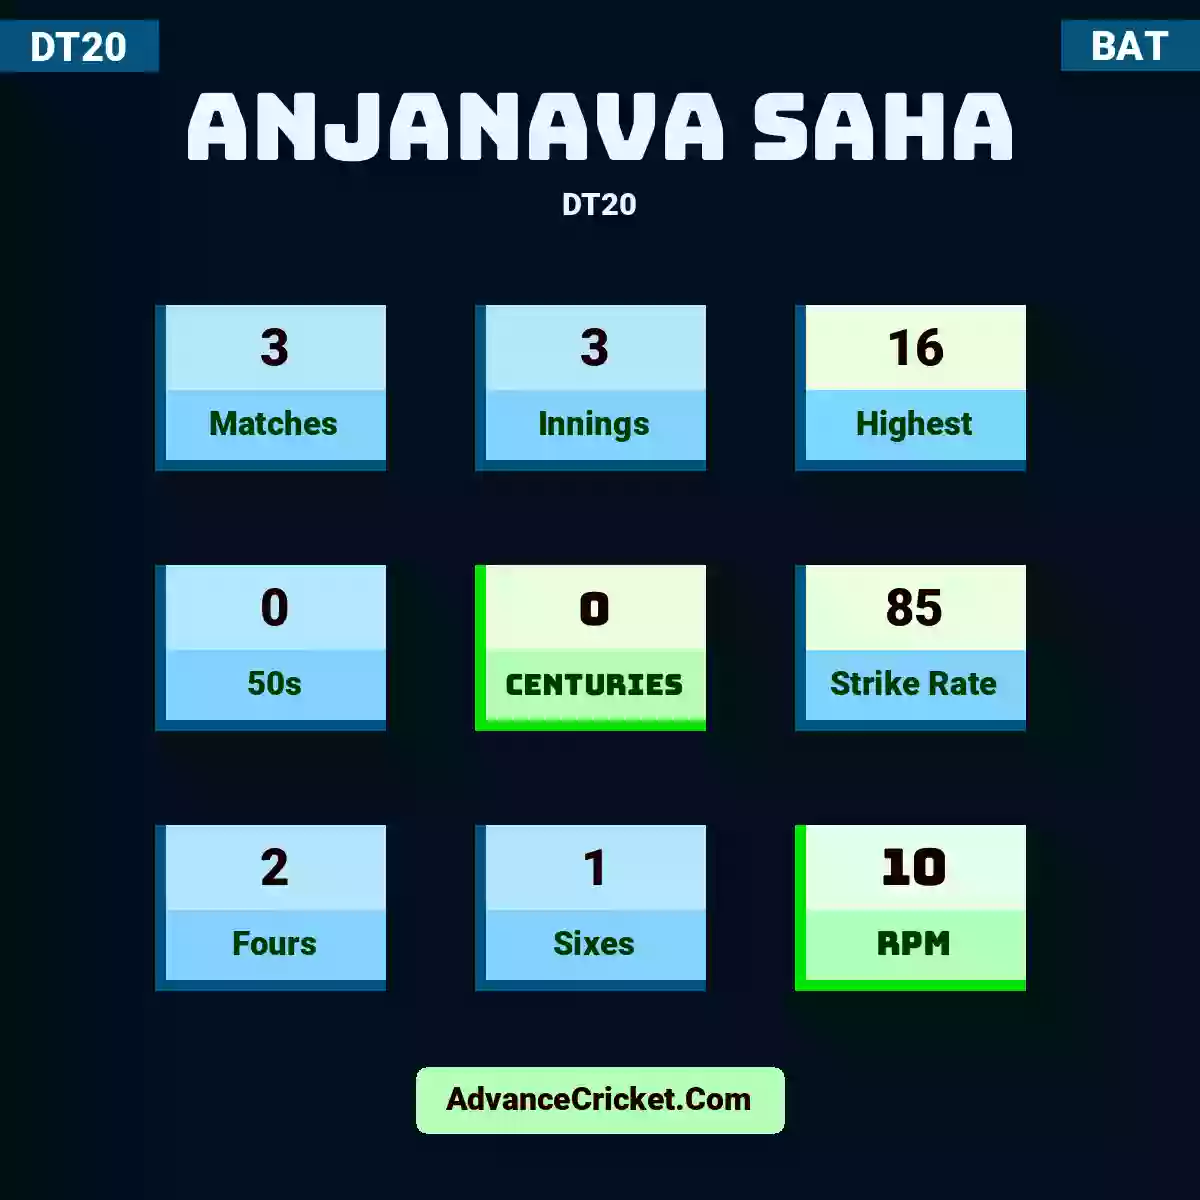 Anjanava Saha DT20 , Anjanava Saha played 3 matches, scored 16 runs as highest, 0 half-centuries, and 0 centuries, with a strike rate of 85. A.Saha hit 2 fours and 1 sixes, with an RPM of 10.